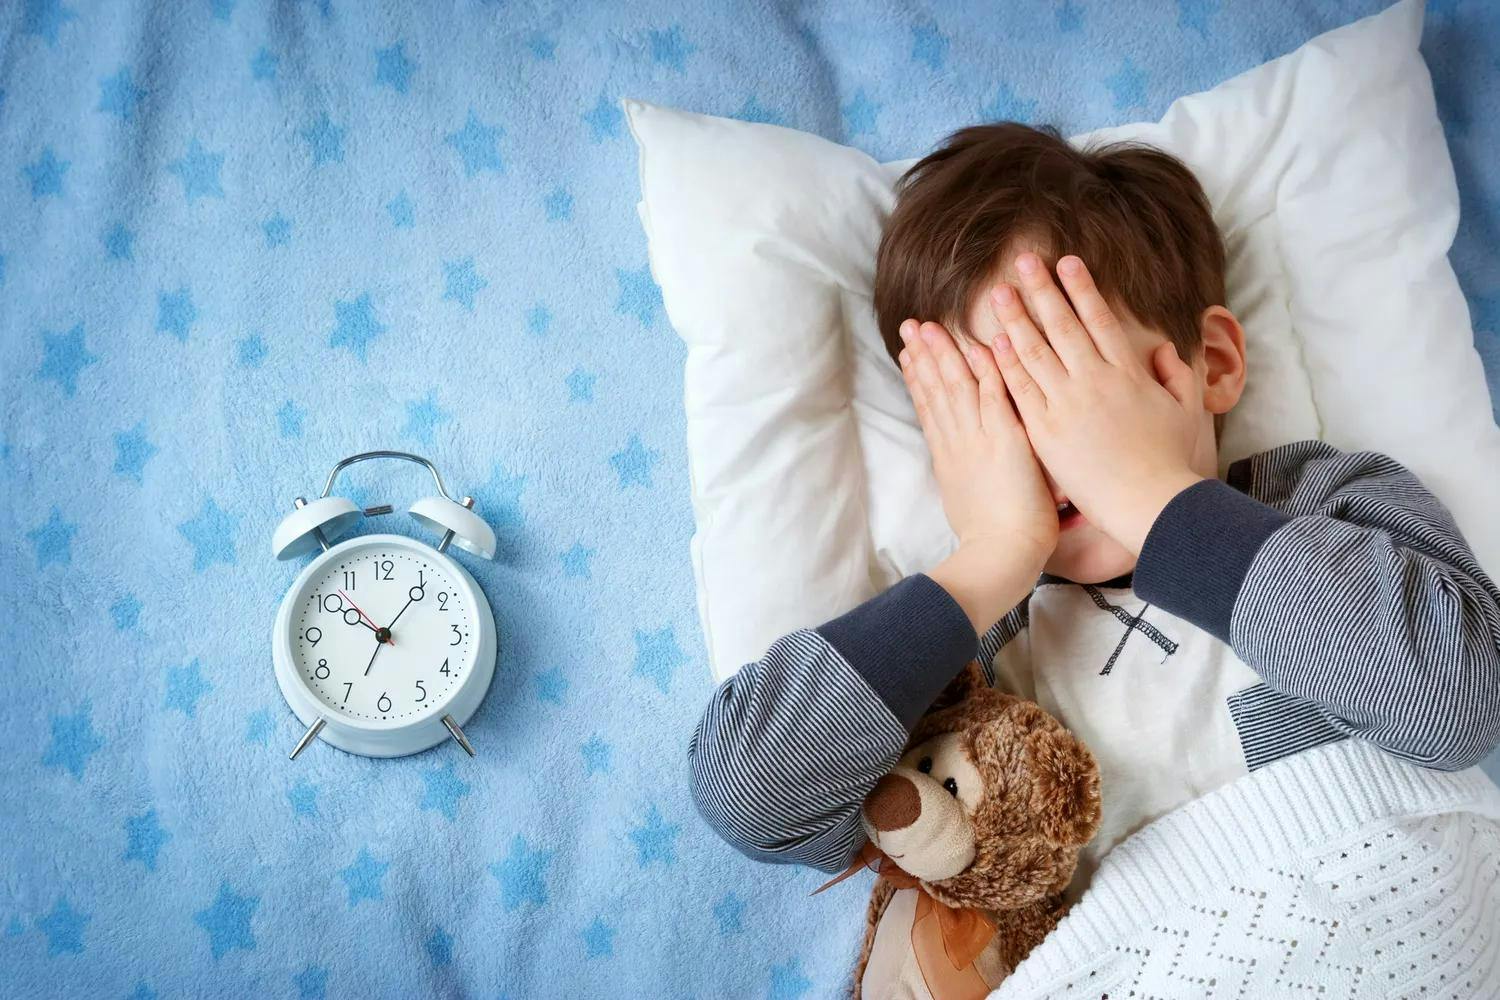 Longitudinal study of sleep and ADHD symptoms